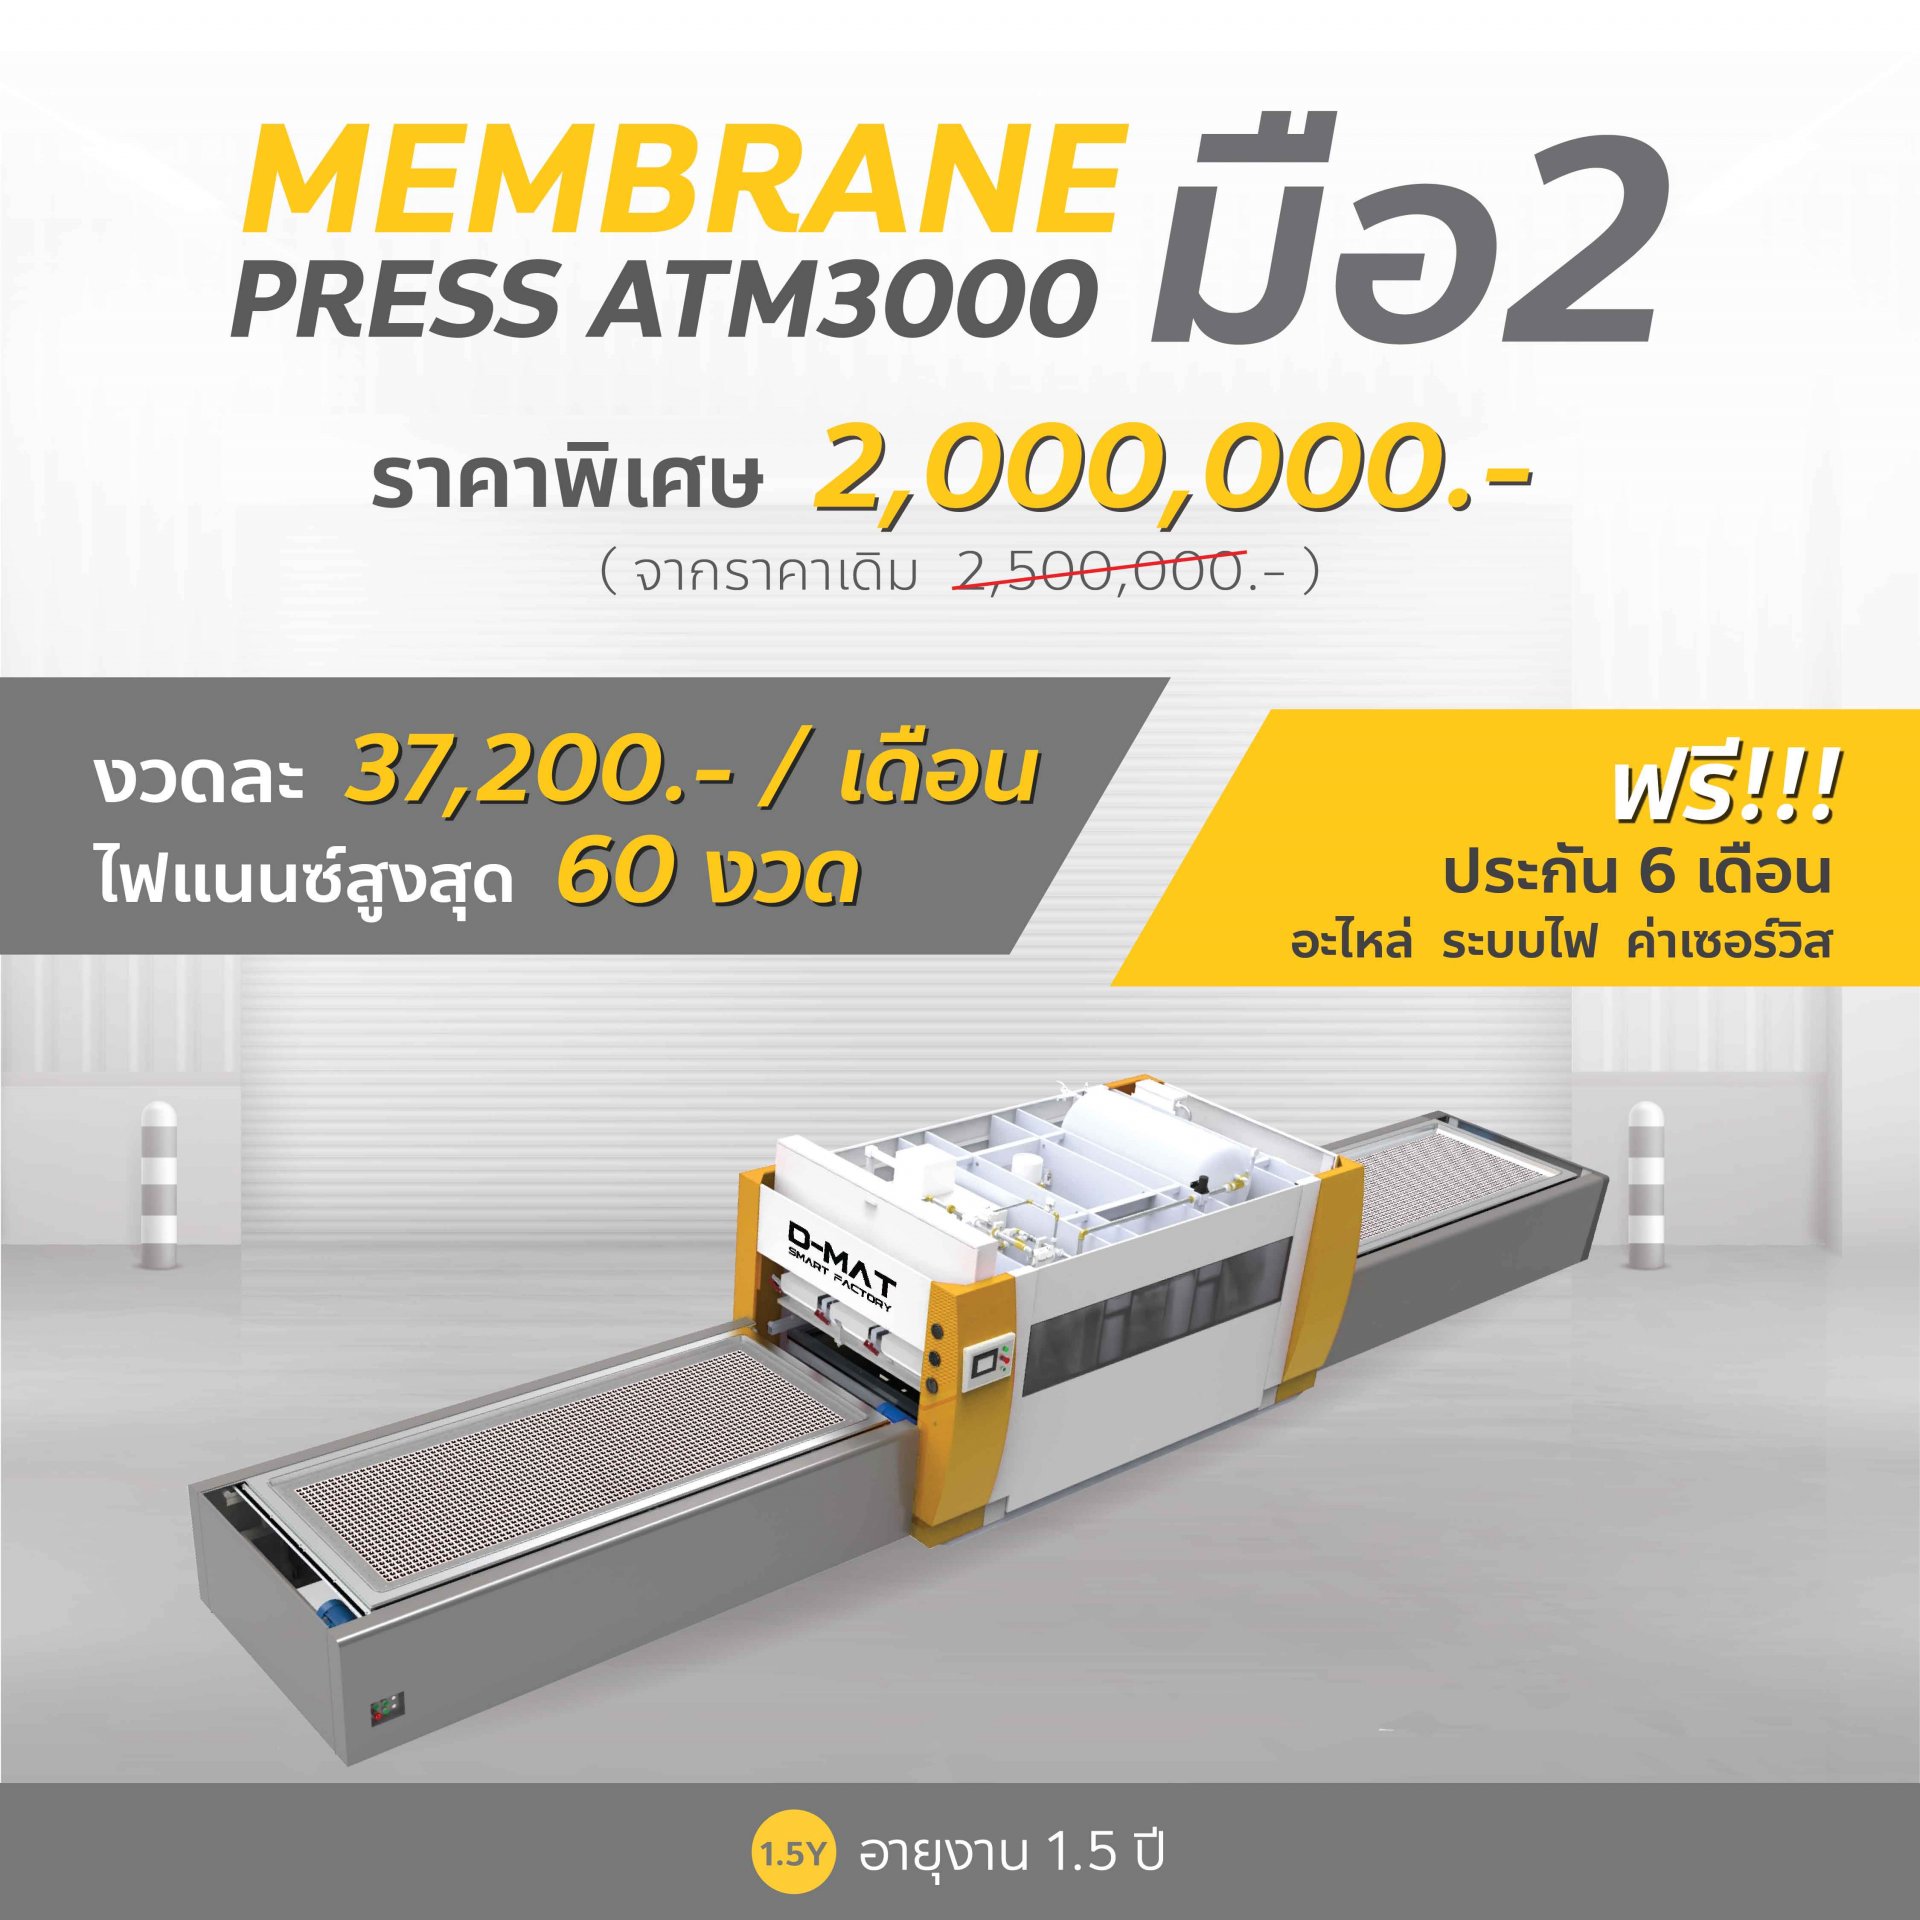 Membrane press ATM3000 มือ2